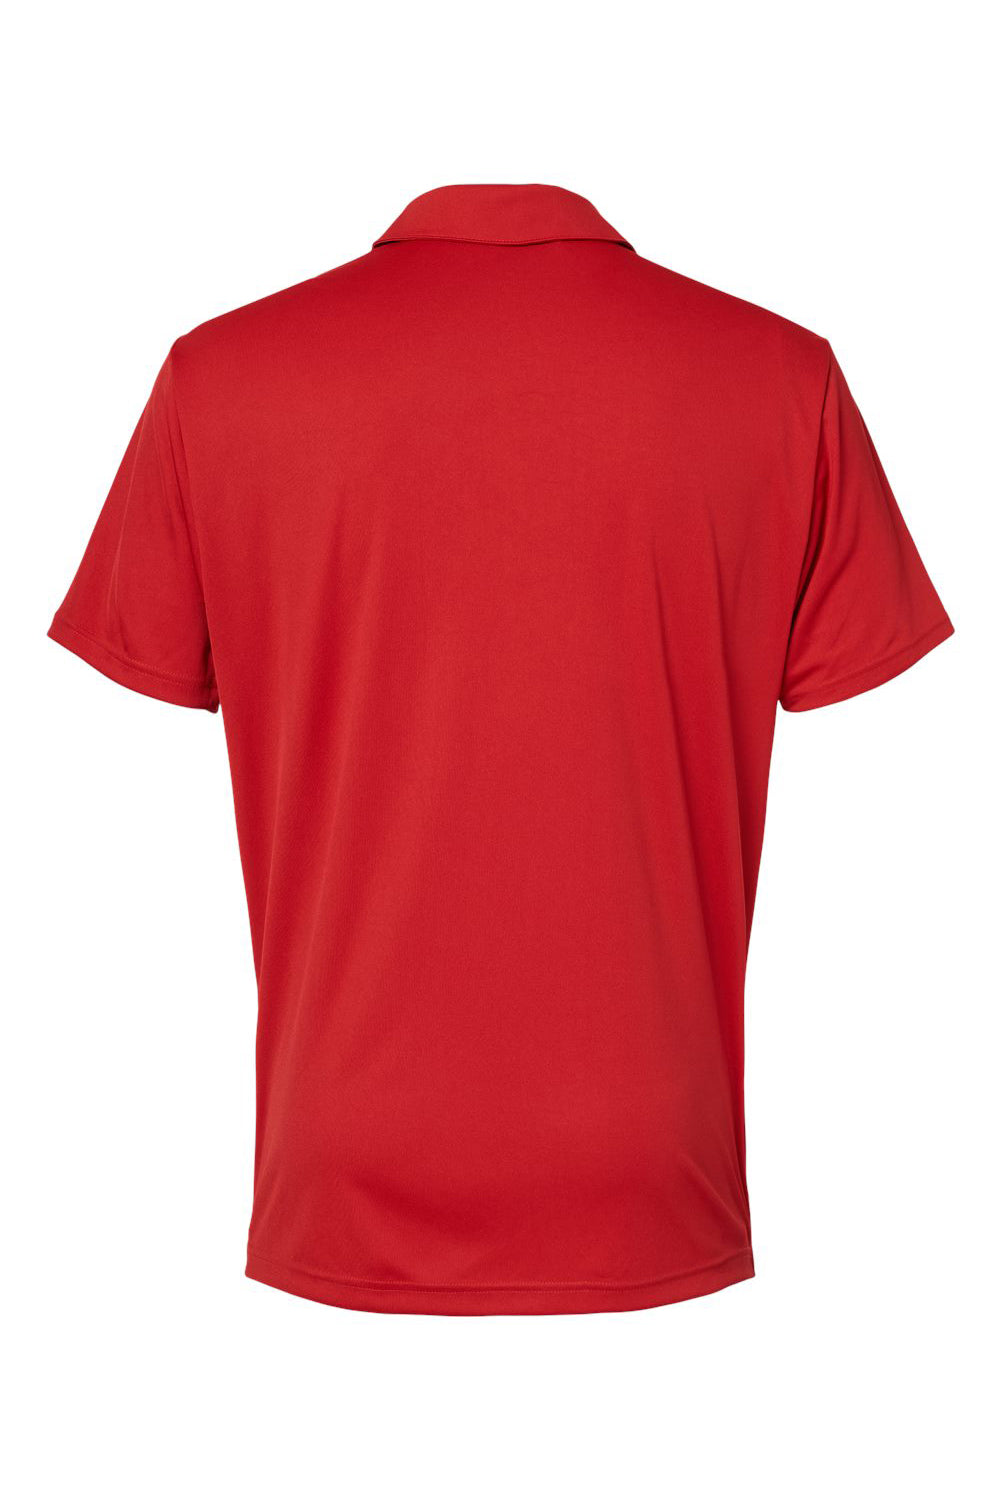 Adidas A236 Mens Merch Block Short Sleeve Polo Shirt Collegiate Red/Grey/Black Flat Back